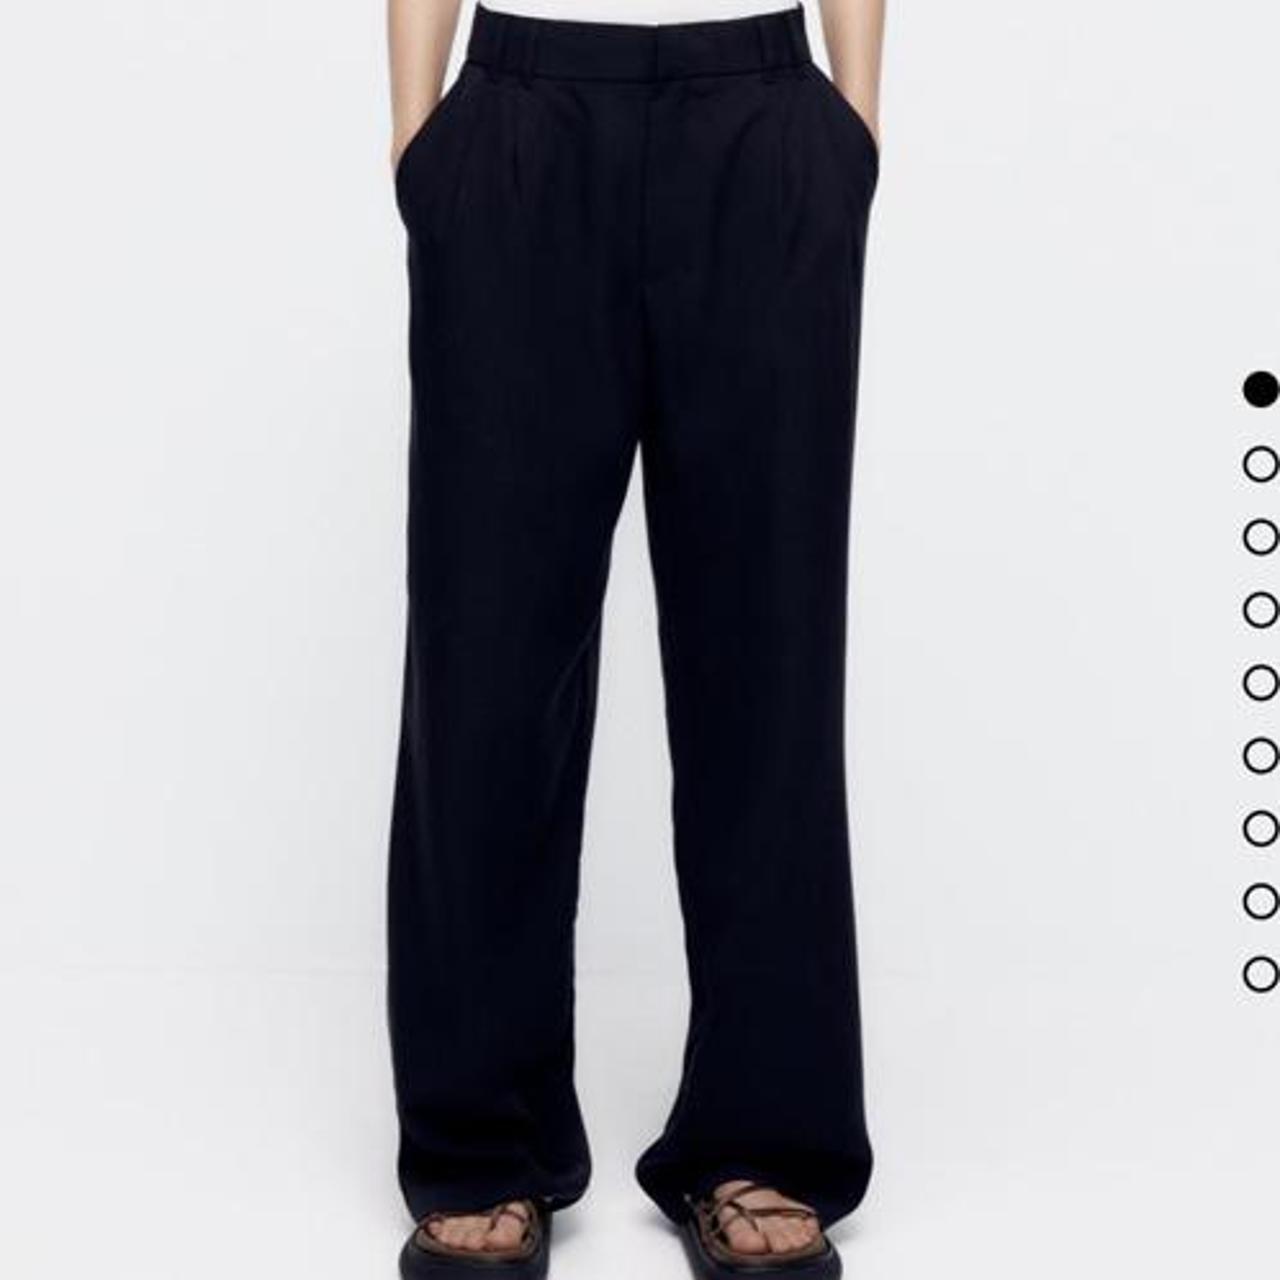 Product Image 2 - Zara black pants
Worn a couple